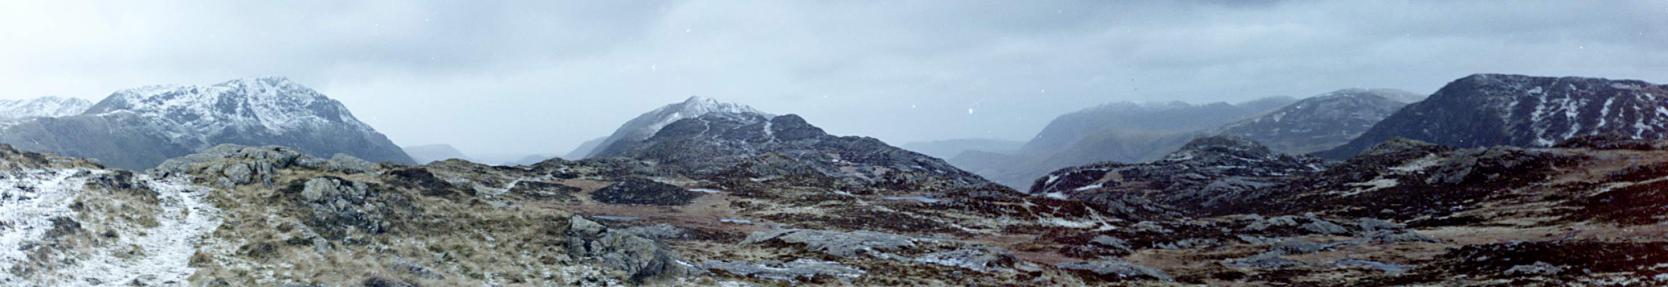 1991-01-03b.jpg - High Stile panorama